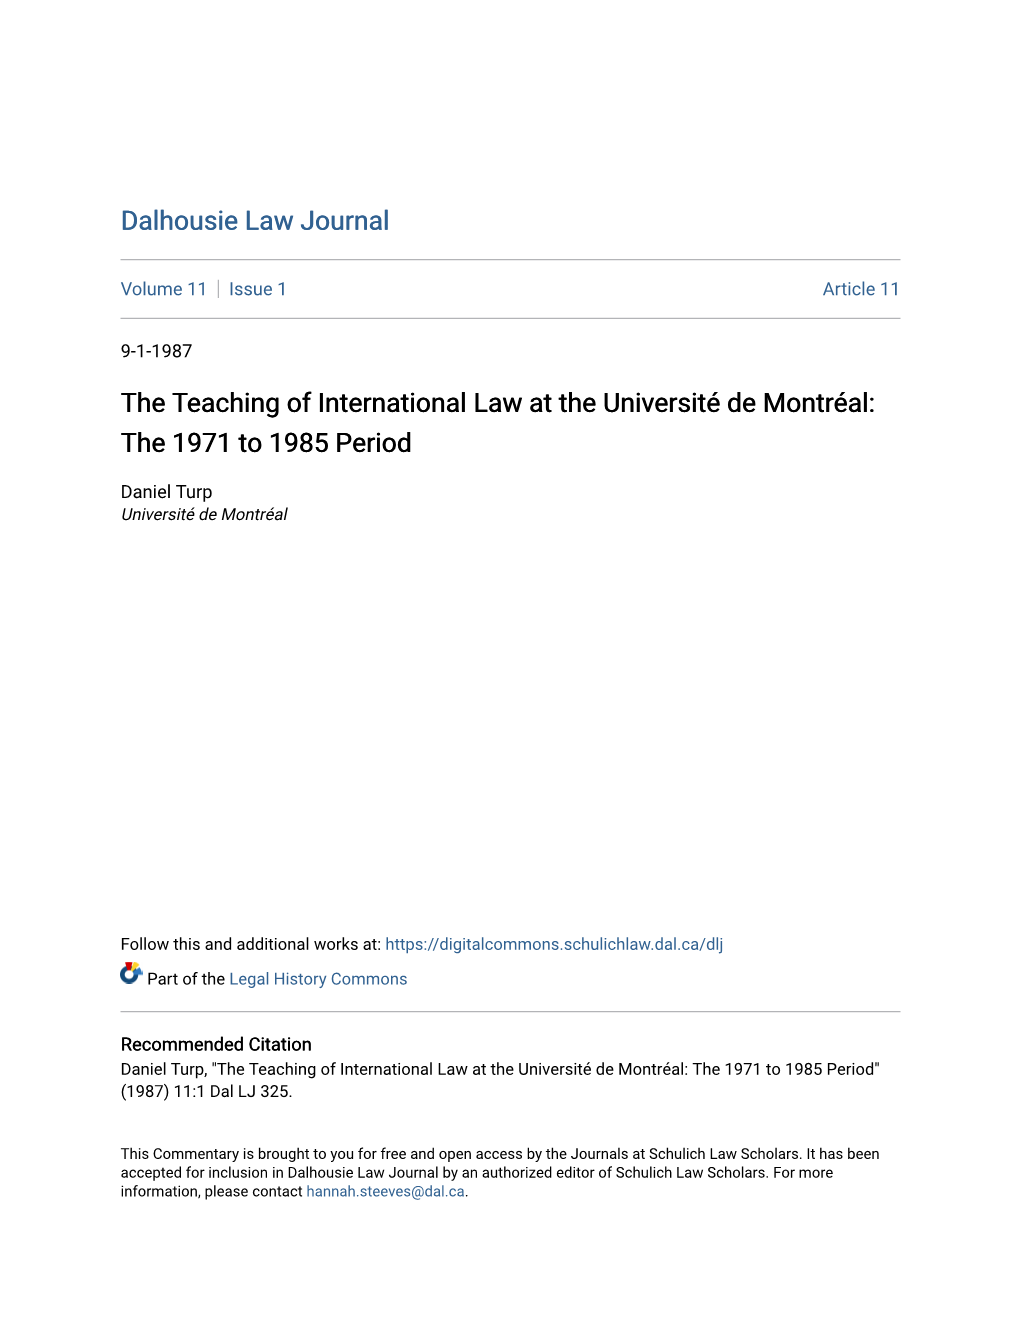 The Teaching of International Law at the Université De Montréal: the 1971 to 1985 Period